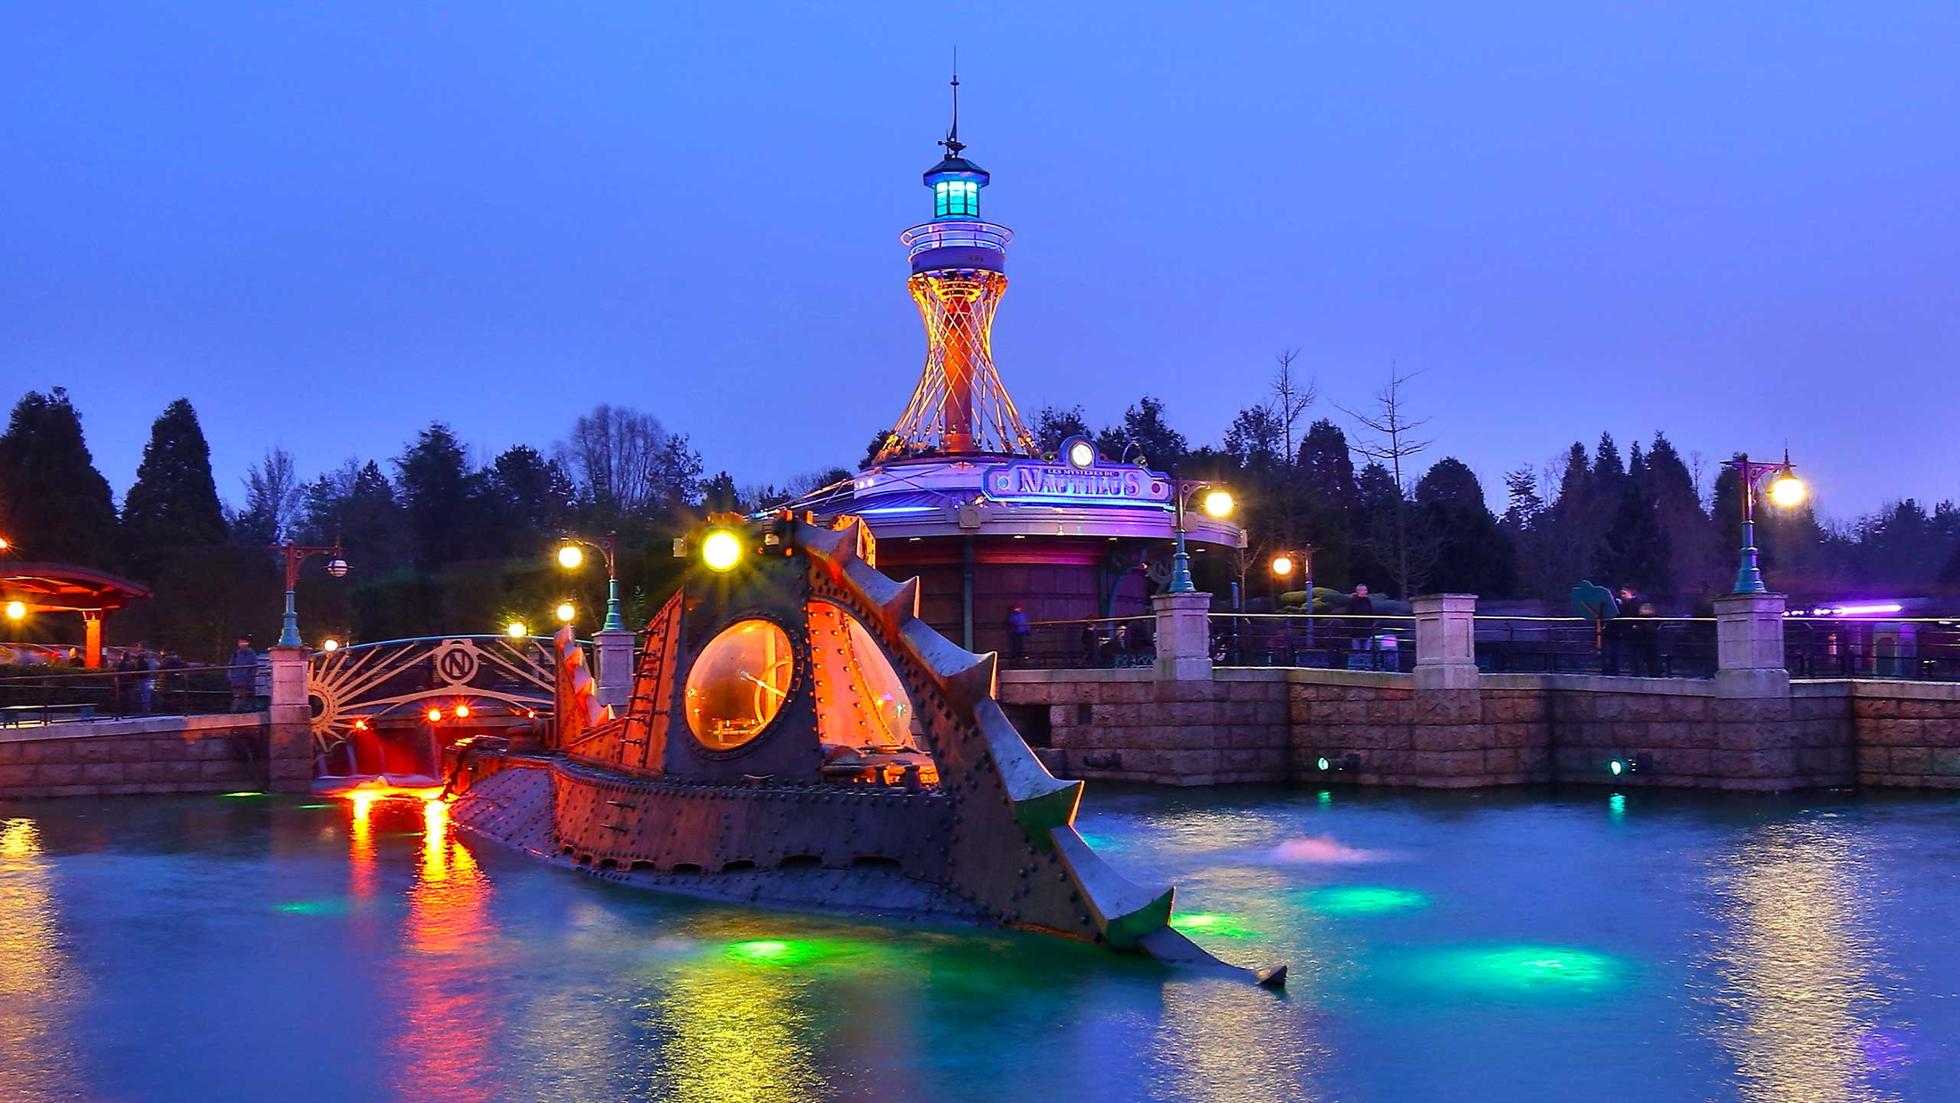 Nautilus Mystery Attraction. Disney Land Paris. Captain Nemo's Nautilus  Submarine. 20,000 Leagues Under the Sea. Euro Disney. Disneyland park.  Jules Verne's submarine. Stock Photo